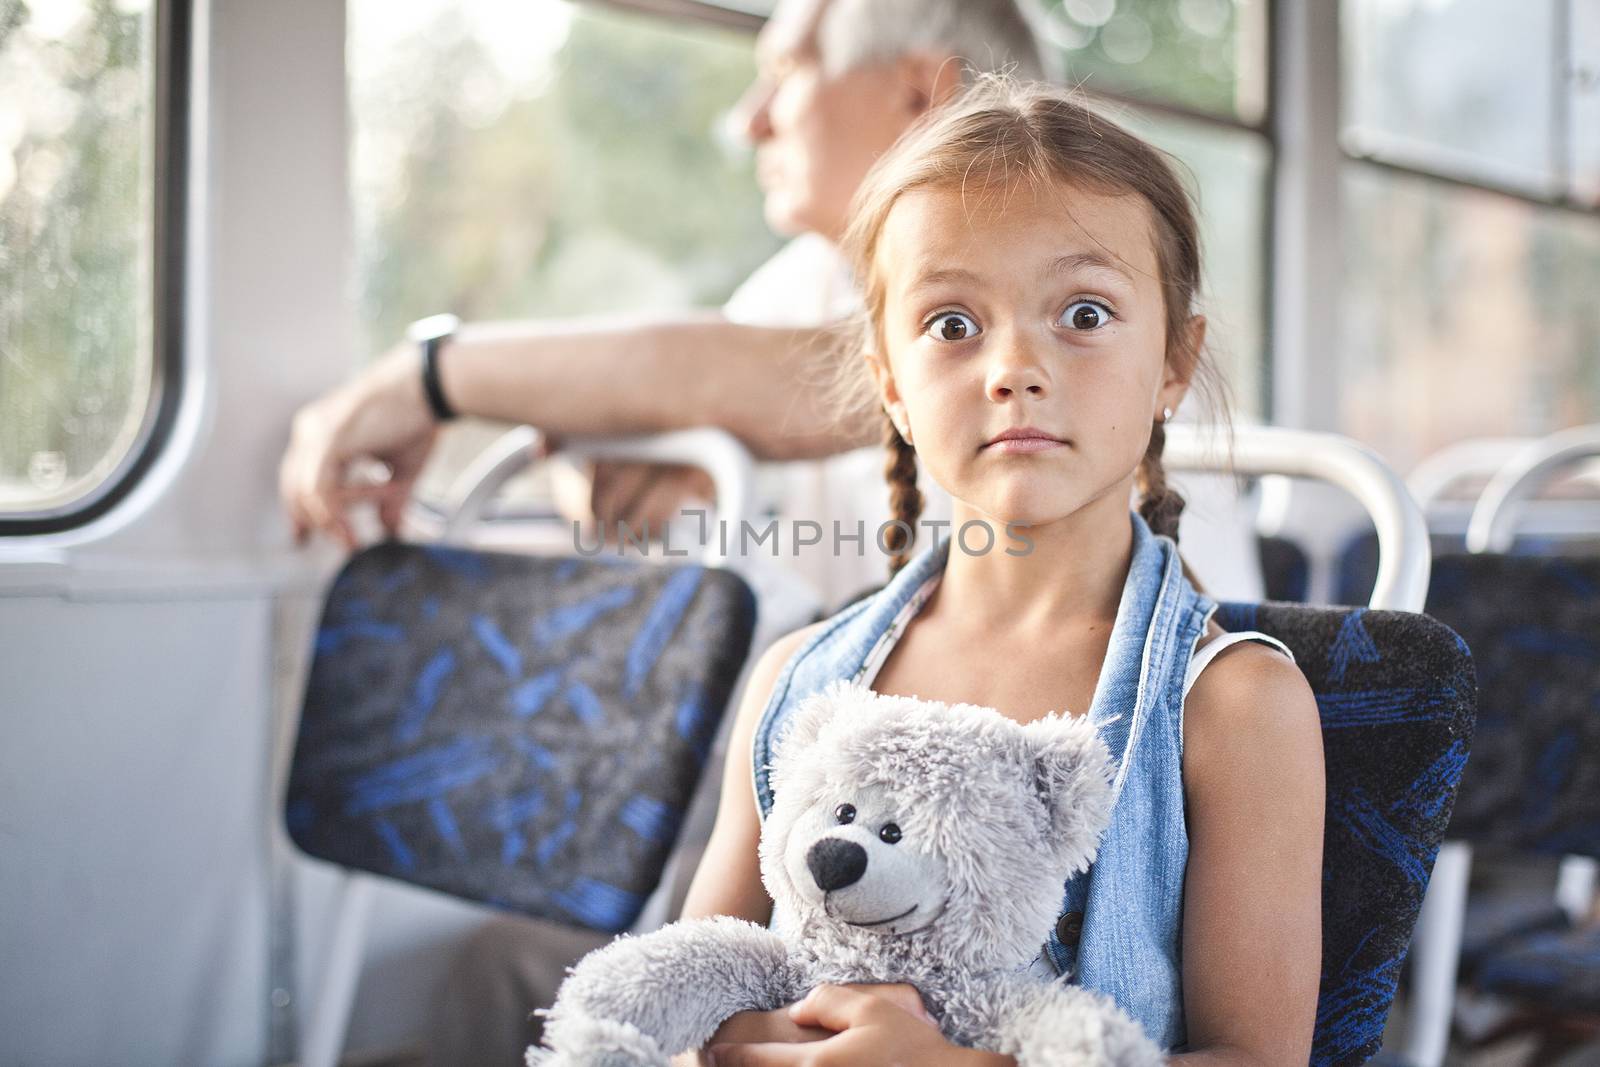 Funny open eyed girl in a tram by Kor